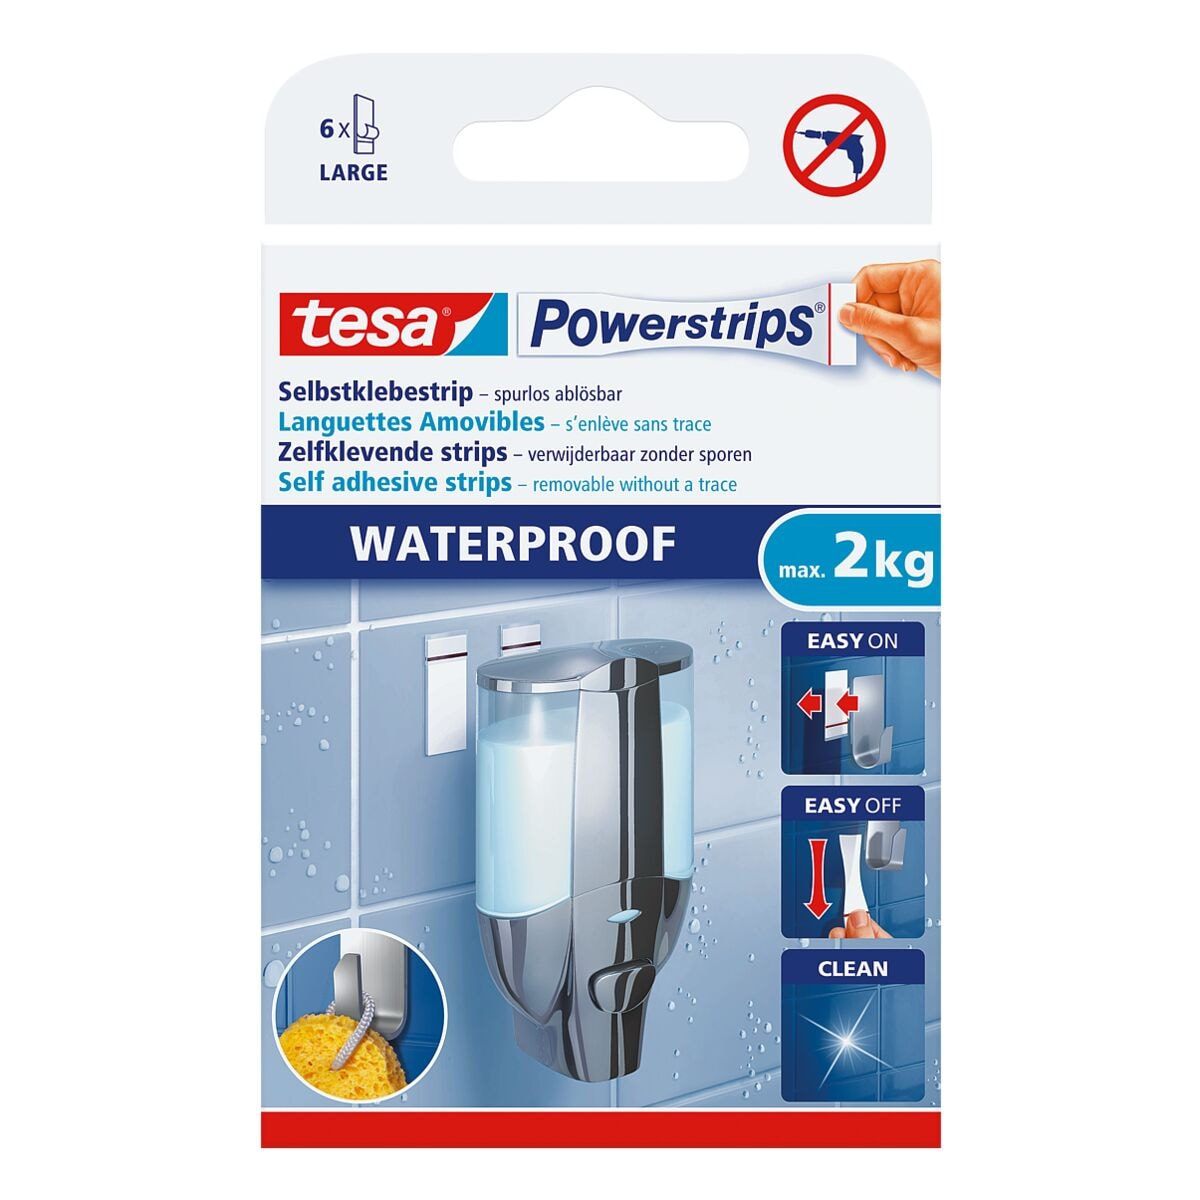 tesa Powerstrips Waterproof Large 59700